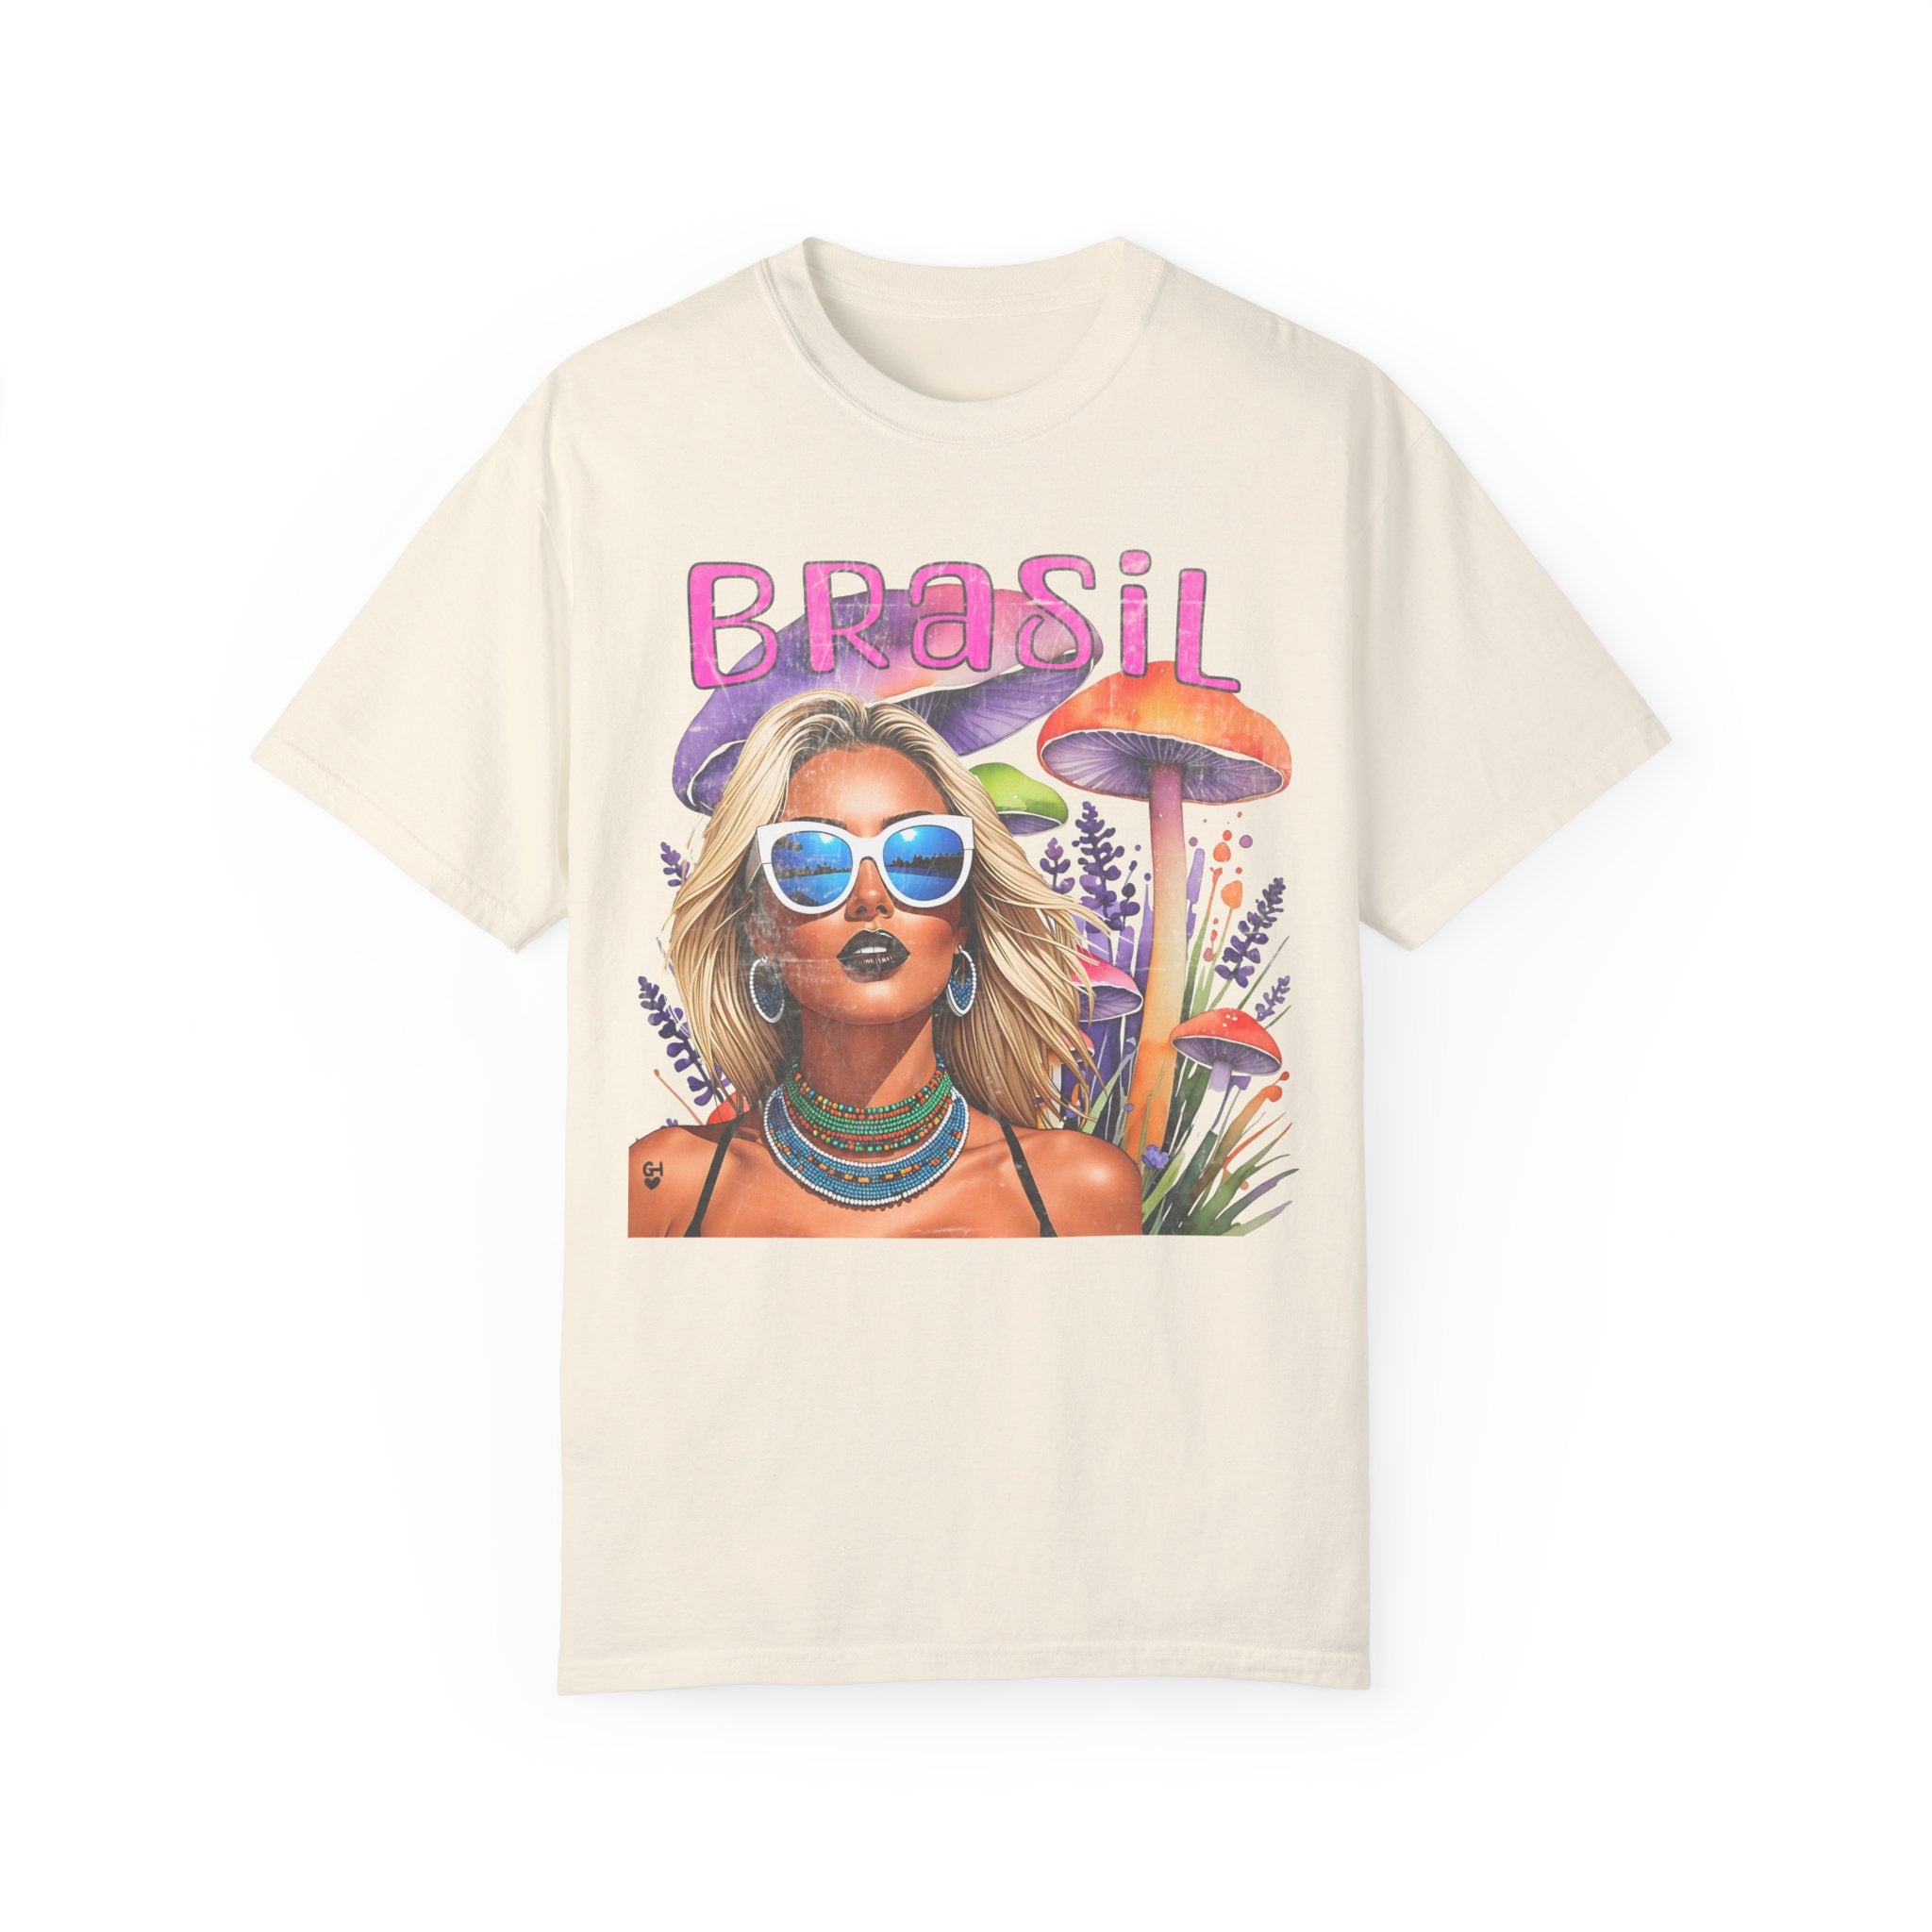 GOLDxTEAL colorful designer Basil graphic t-shirt.